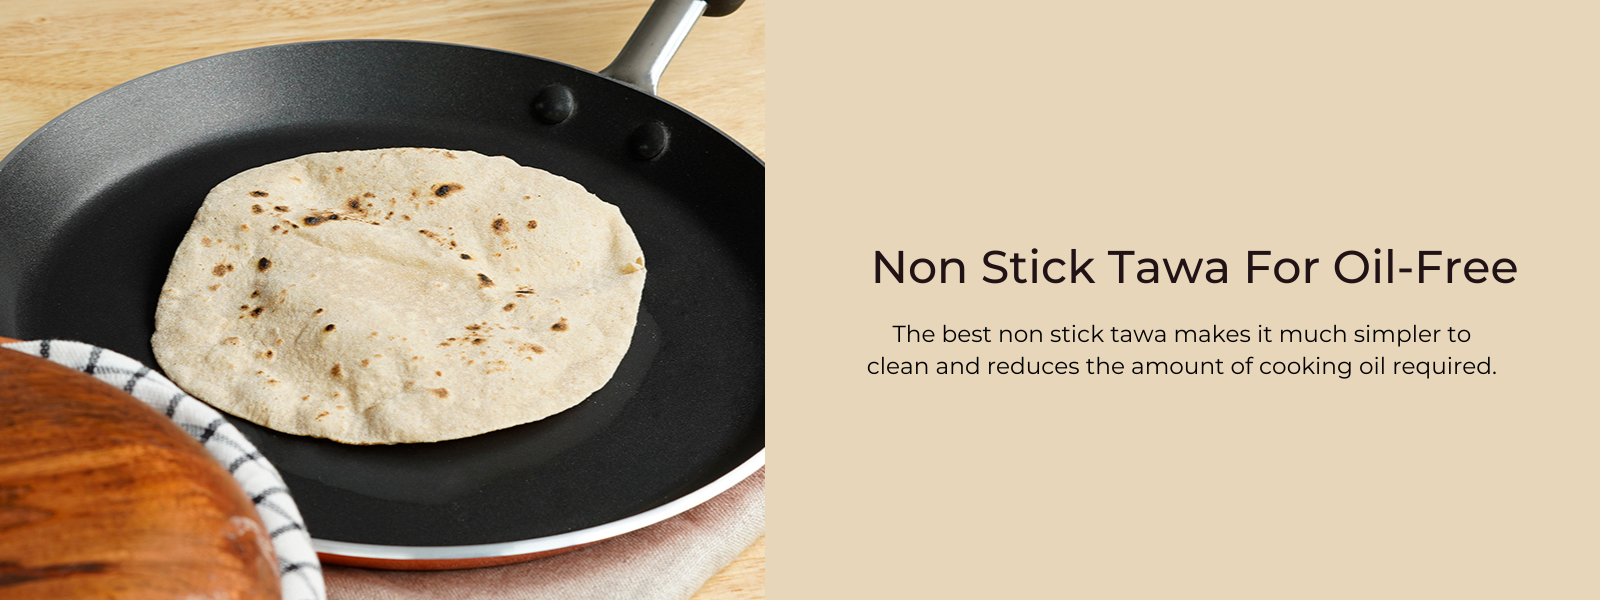 Non Stick Dosa Pan Price: Best Toxin-Free Cookware - PotsandPans India